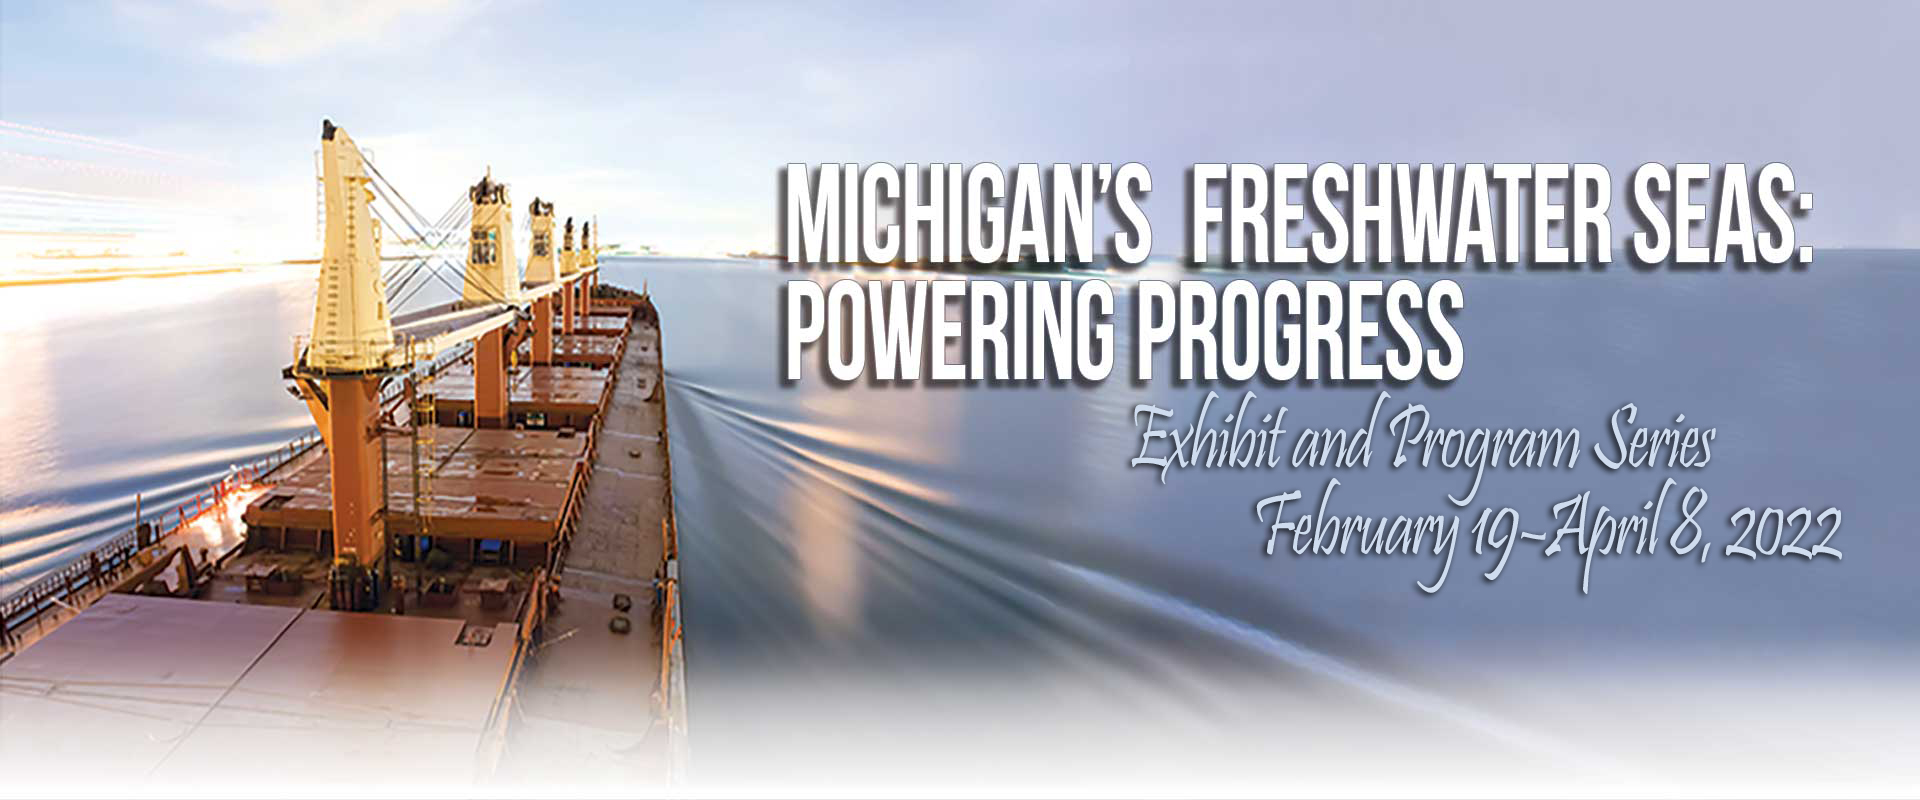 Michigan's Freshwater Seas Image